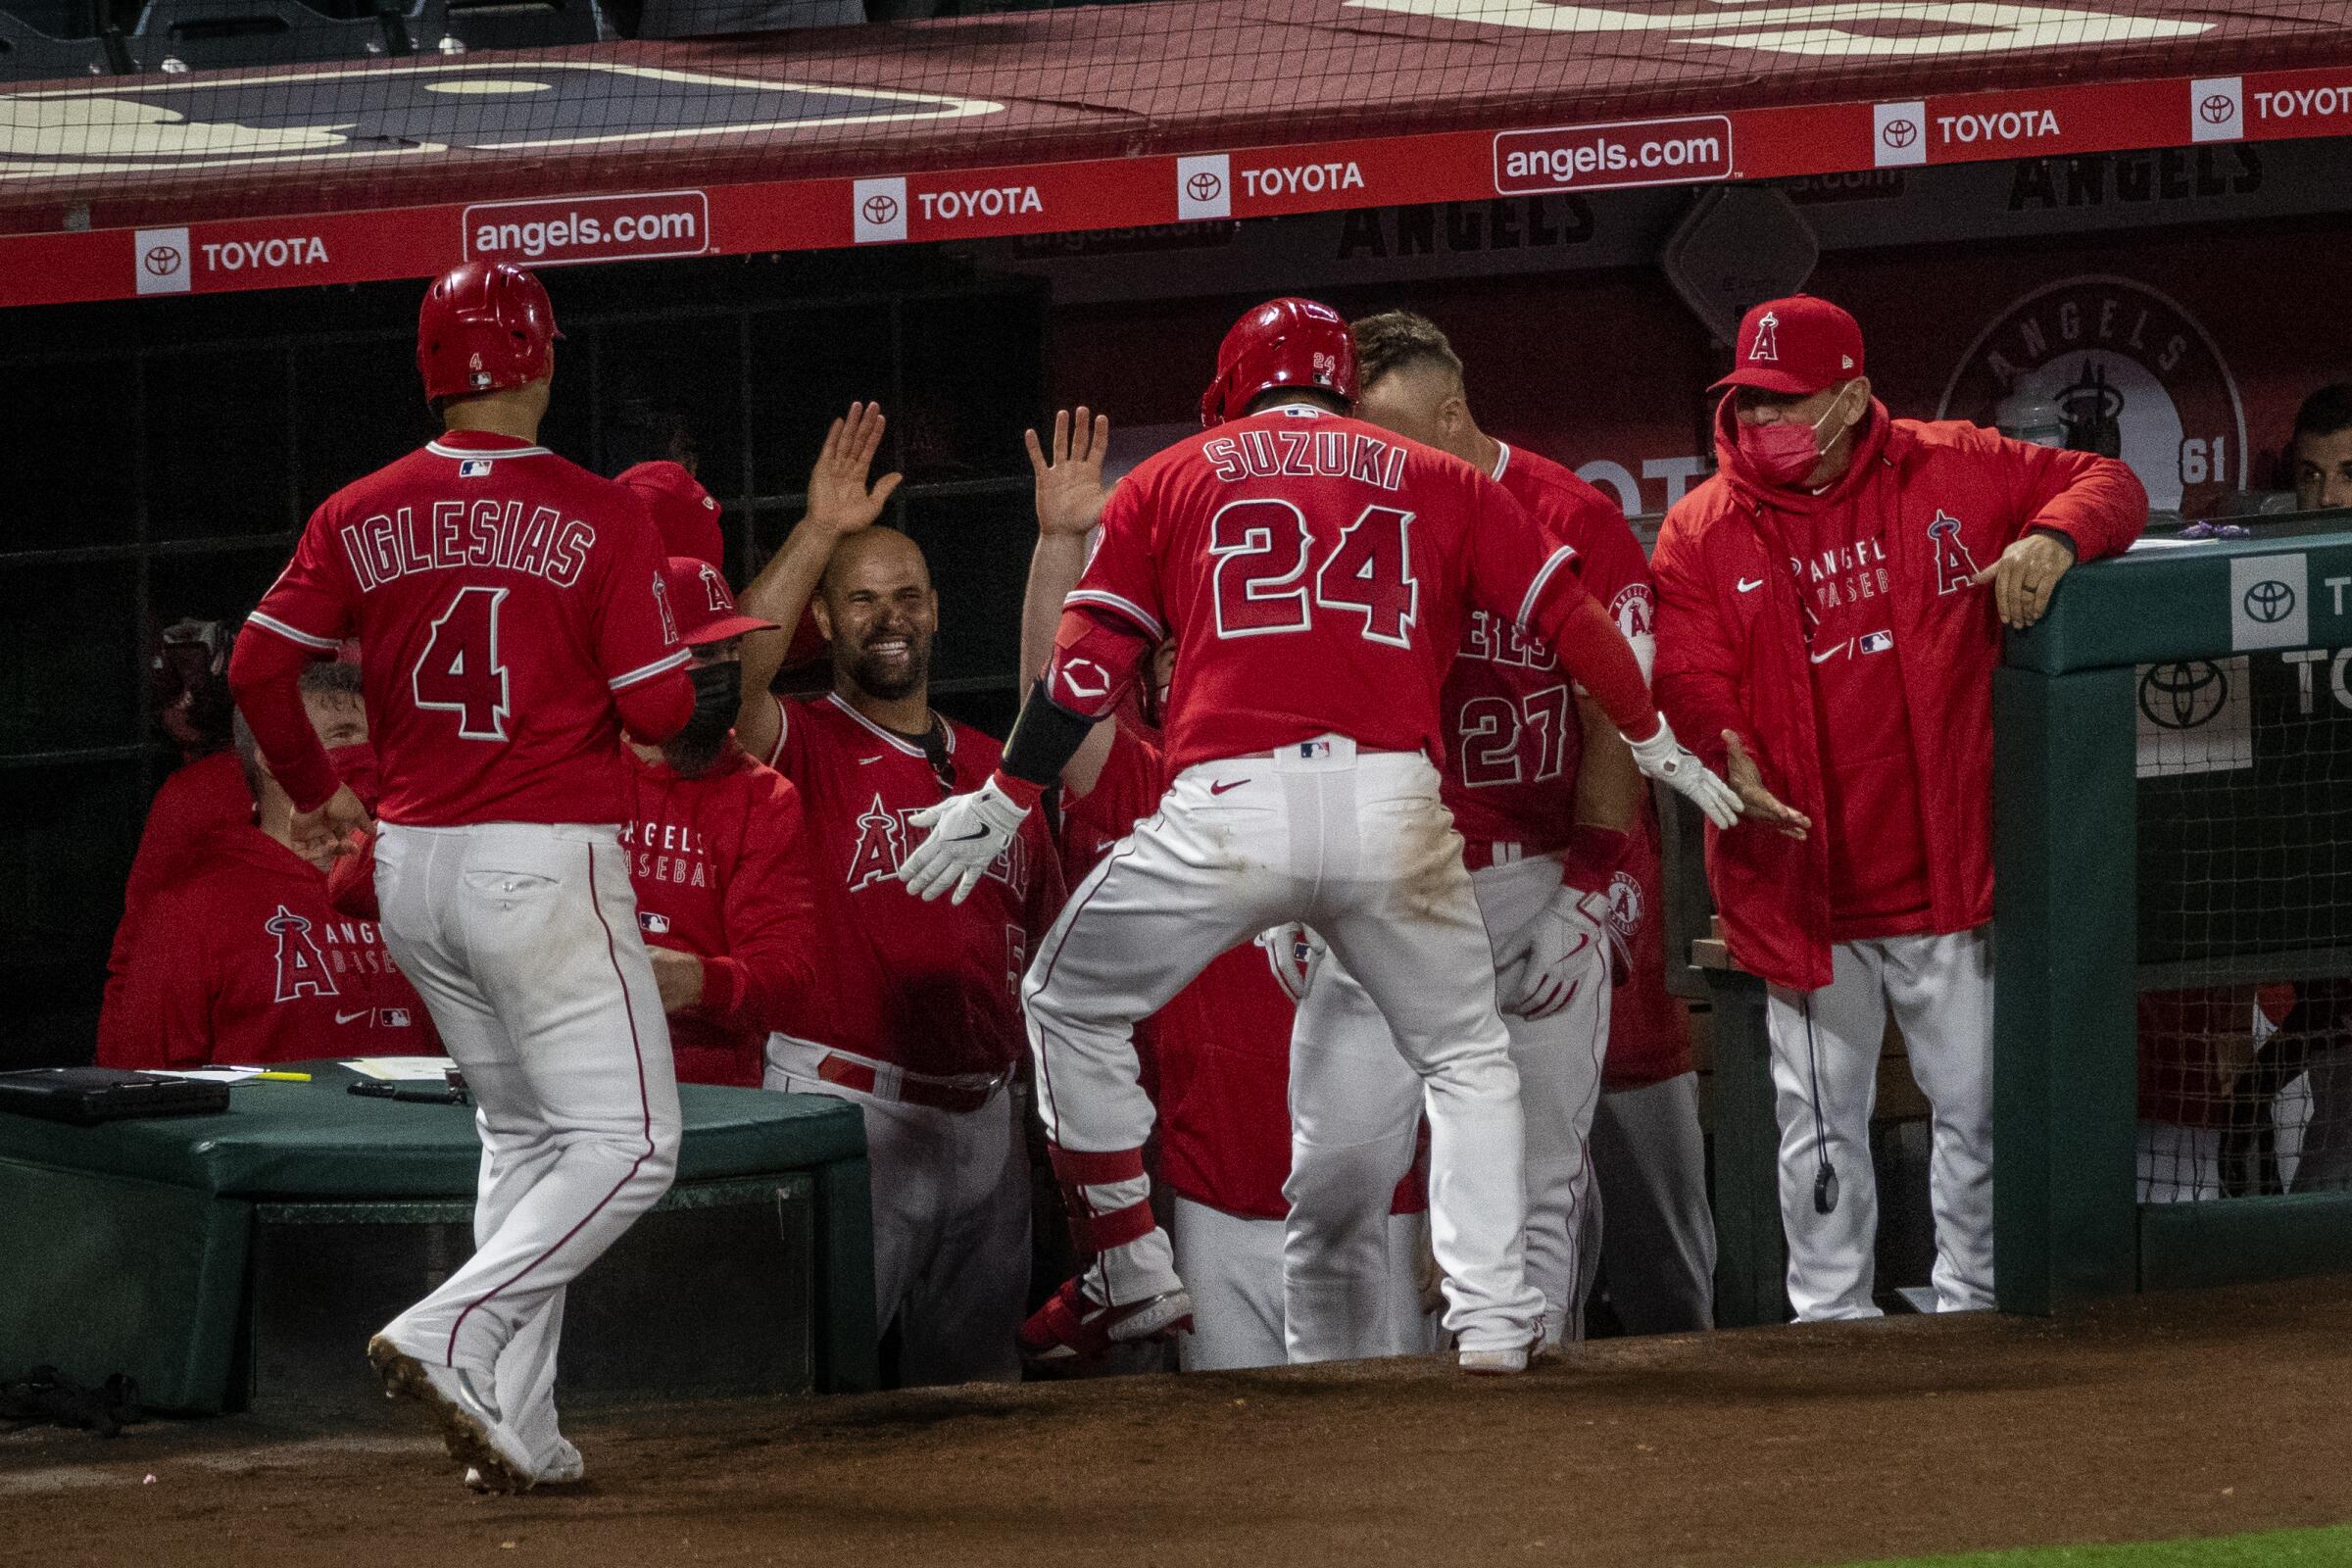 Angels catcher Kurt Suzuki is congratulated at the dugout after hitting a home run against the Texas Rangers.